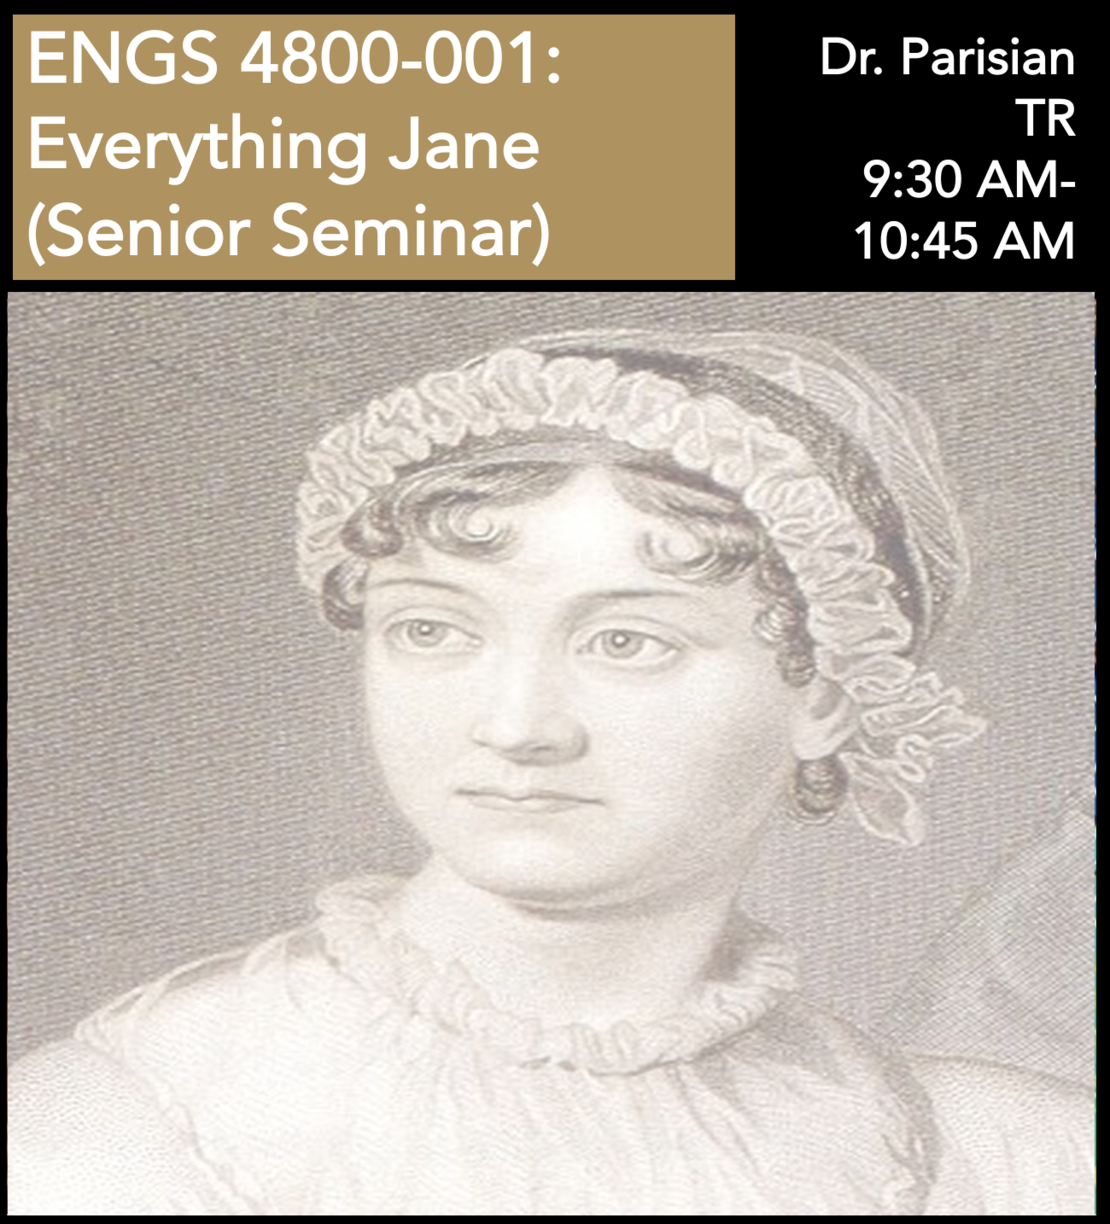 ENGS 4800-001 Everything Jane (Senior Seminar) Dr. Parisian TR 9:30-10:45 AM